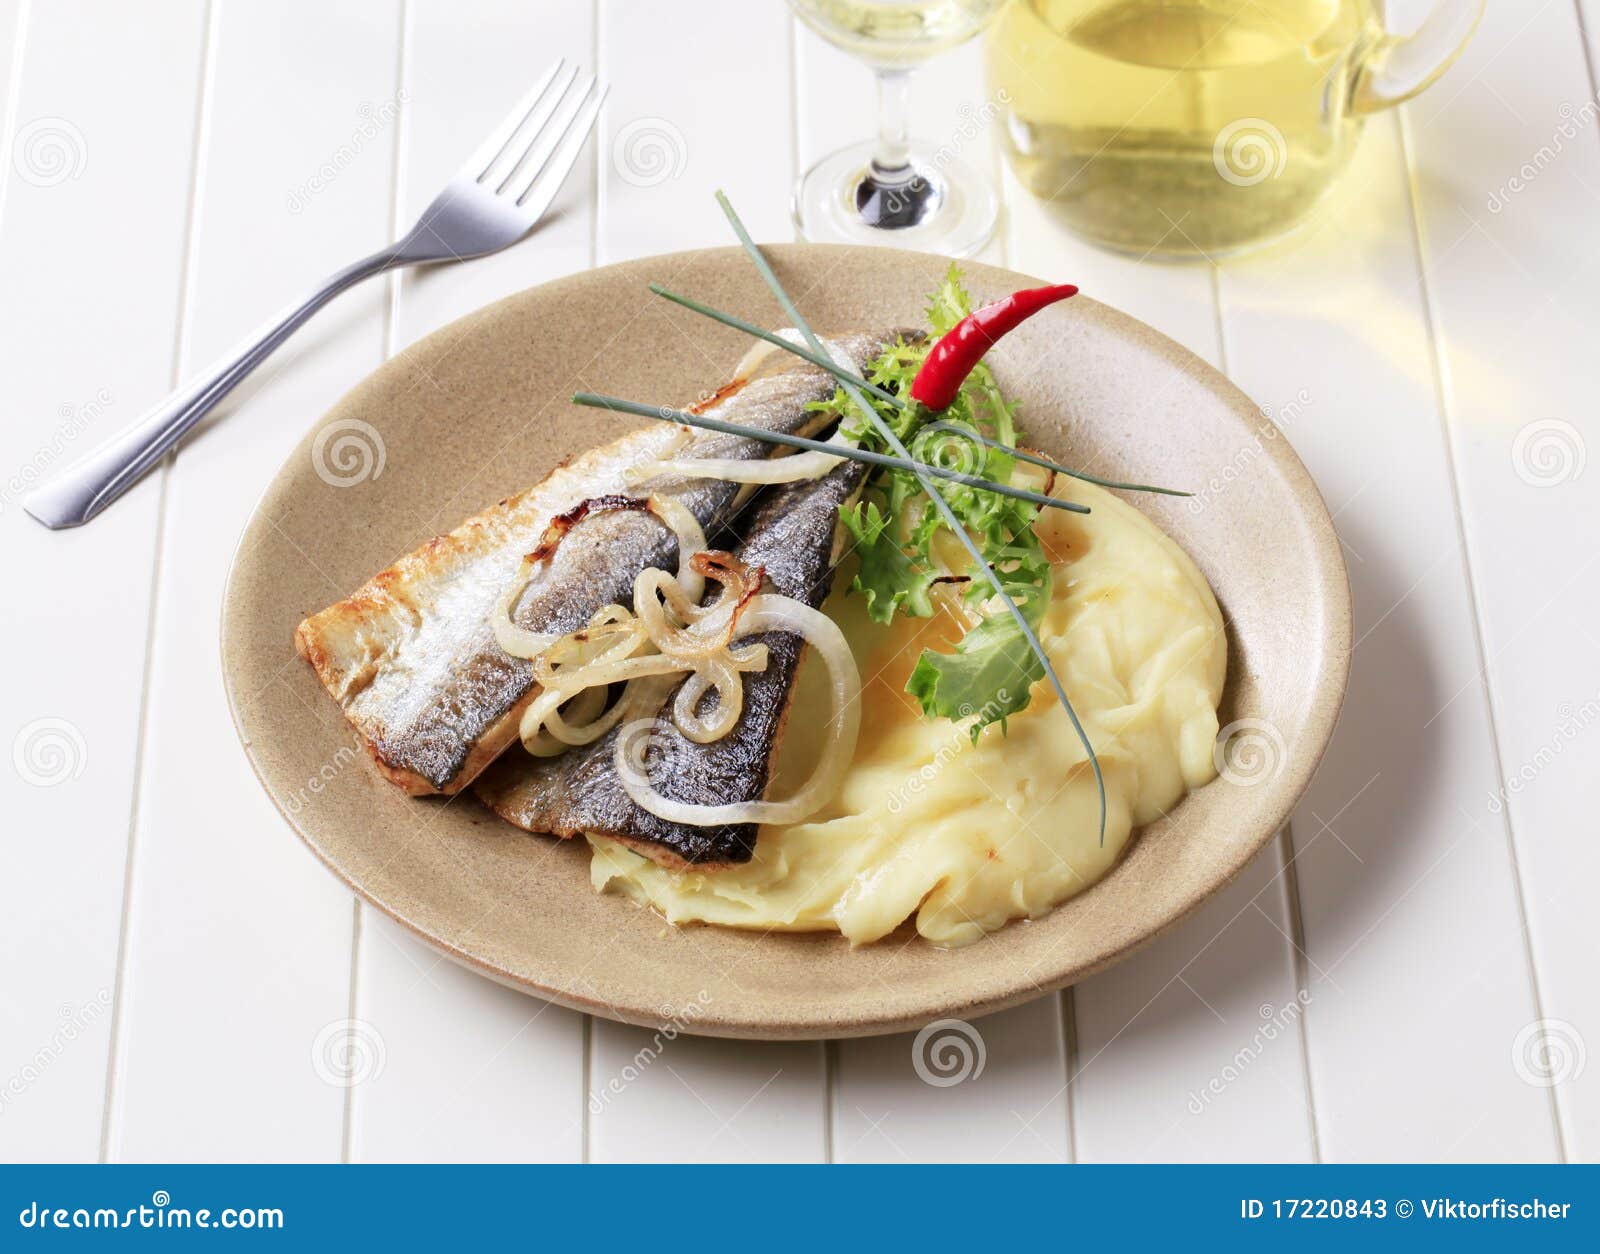 grilled-fish-mashed-potatoes-17220843.jpg